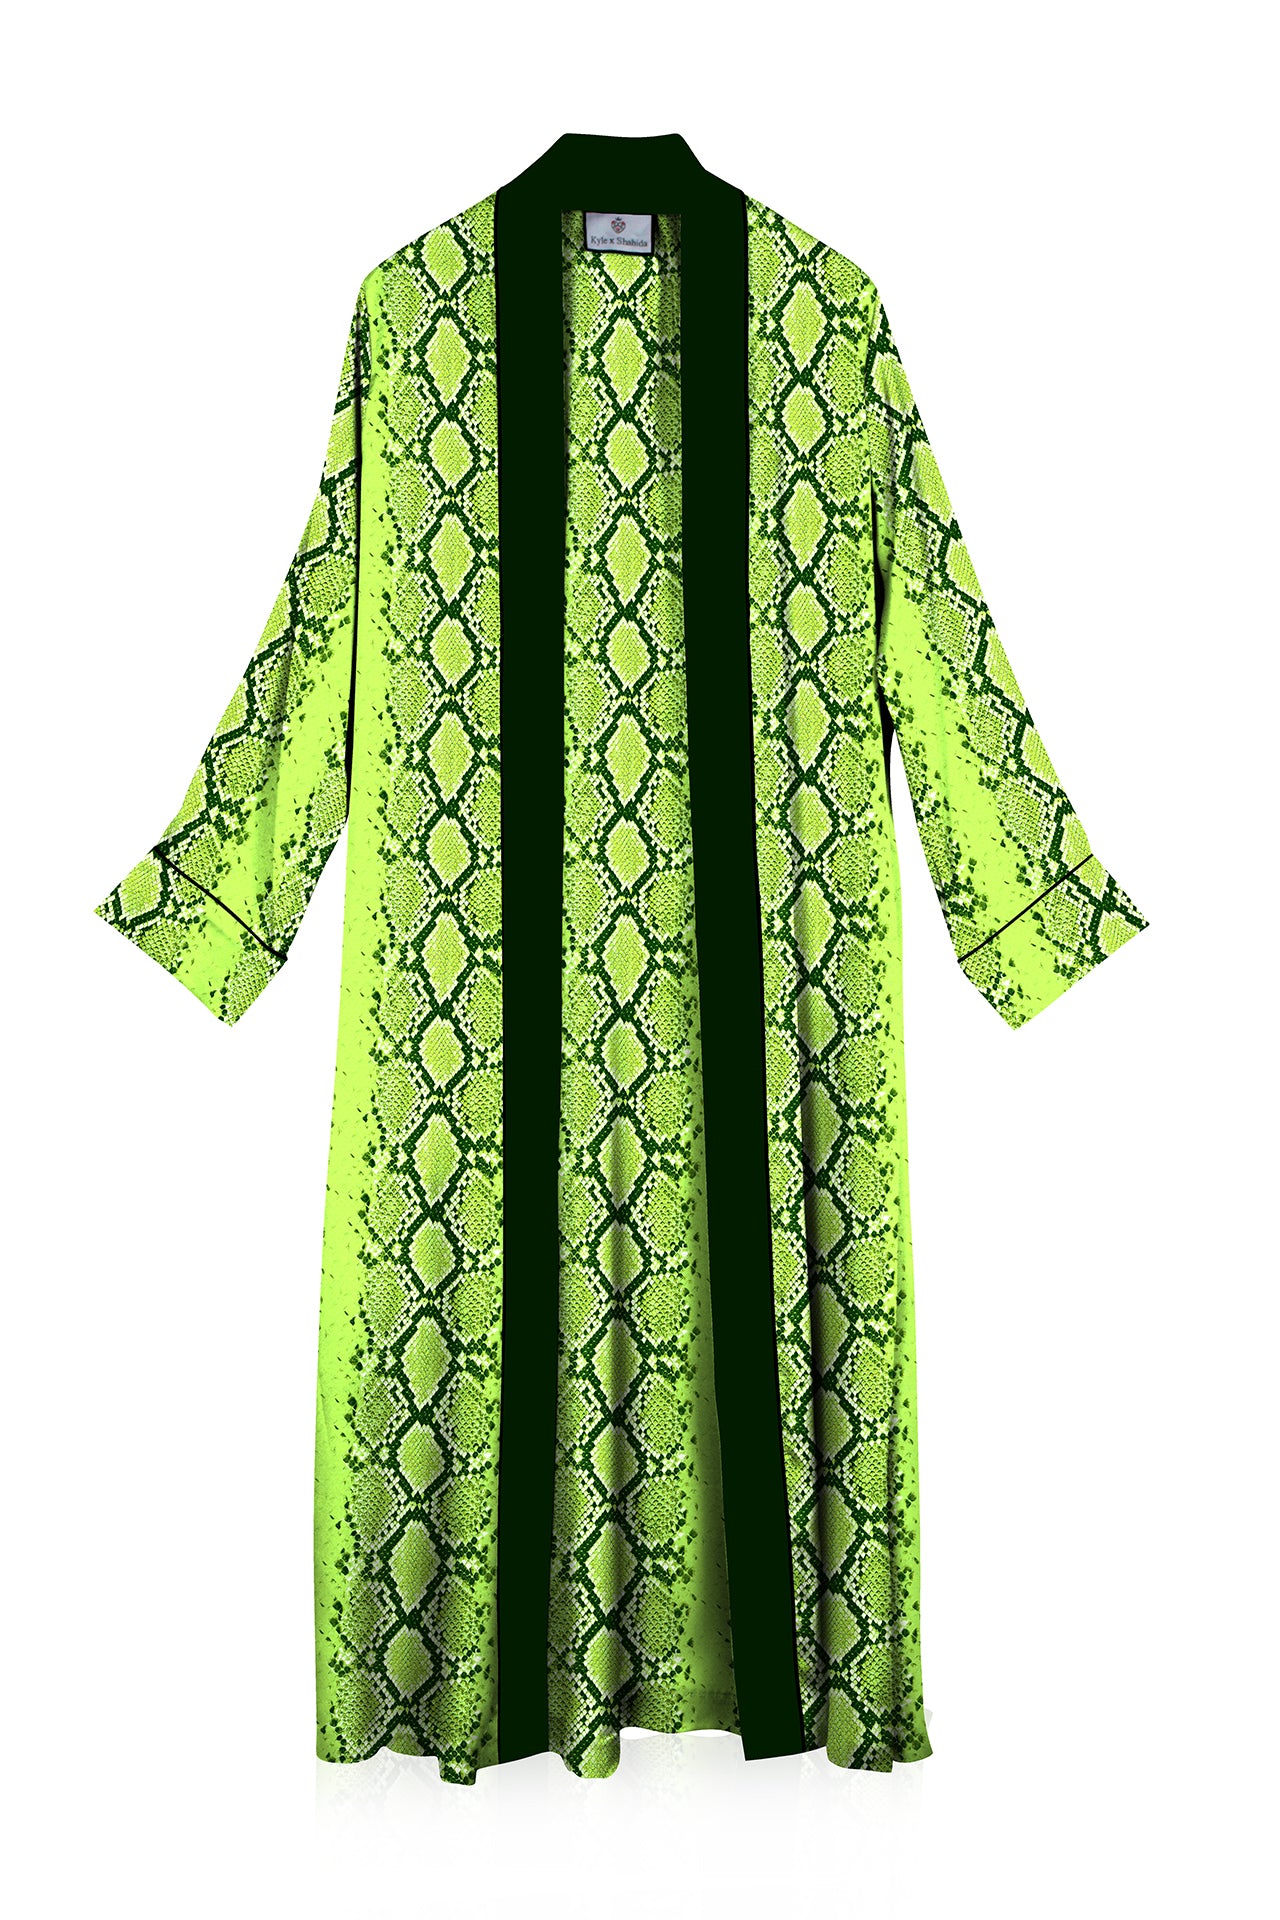 "womens green kimono" "snakeskin kimono" "kim ono silk robe" "Kyle X Shahida"